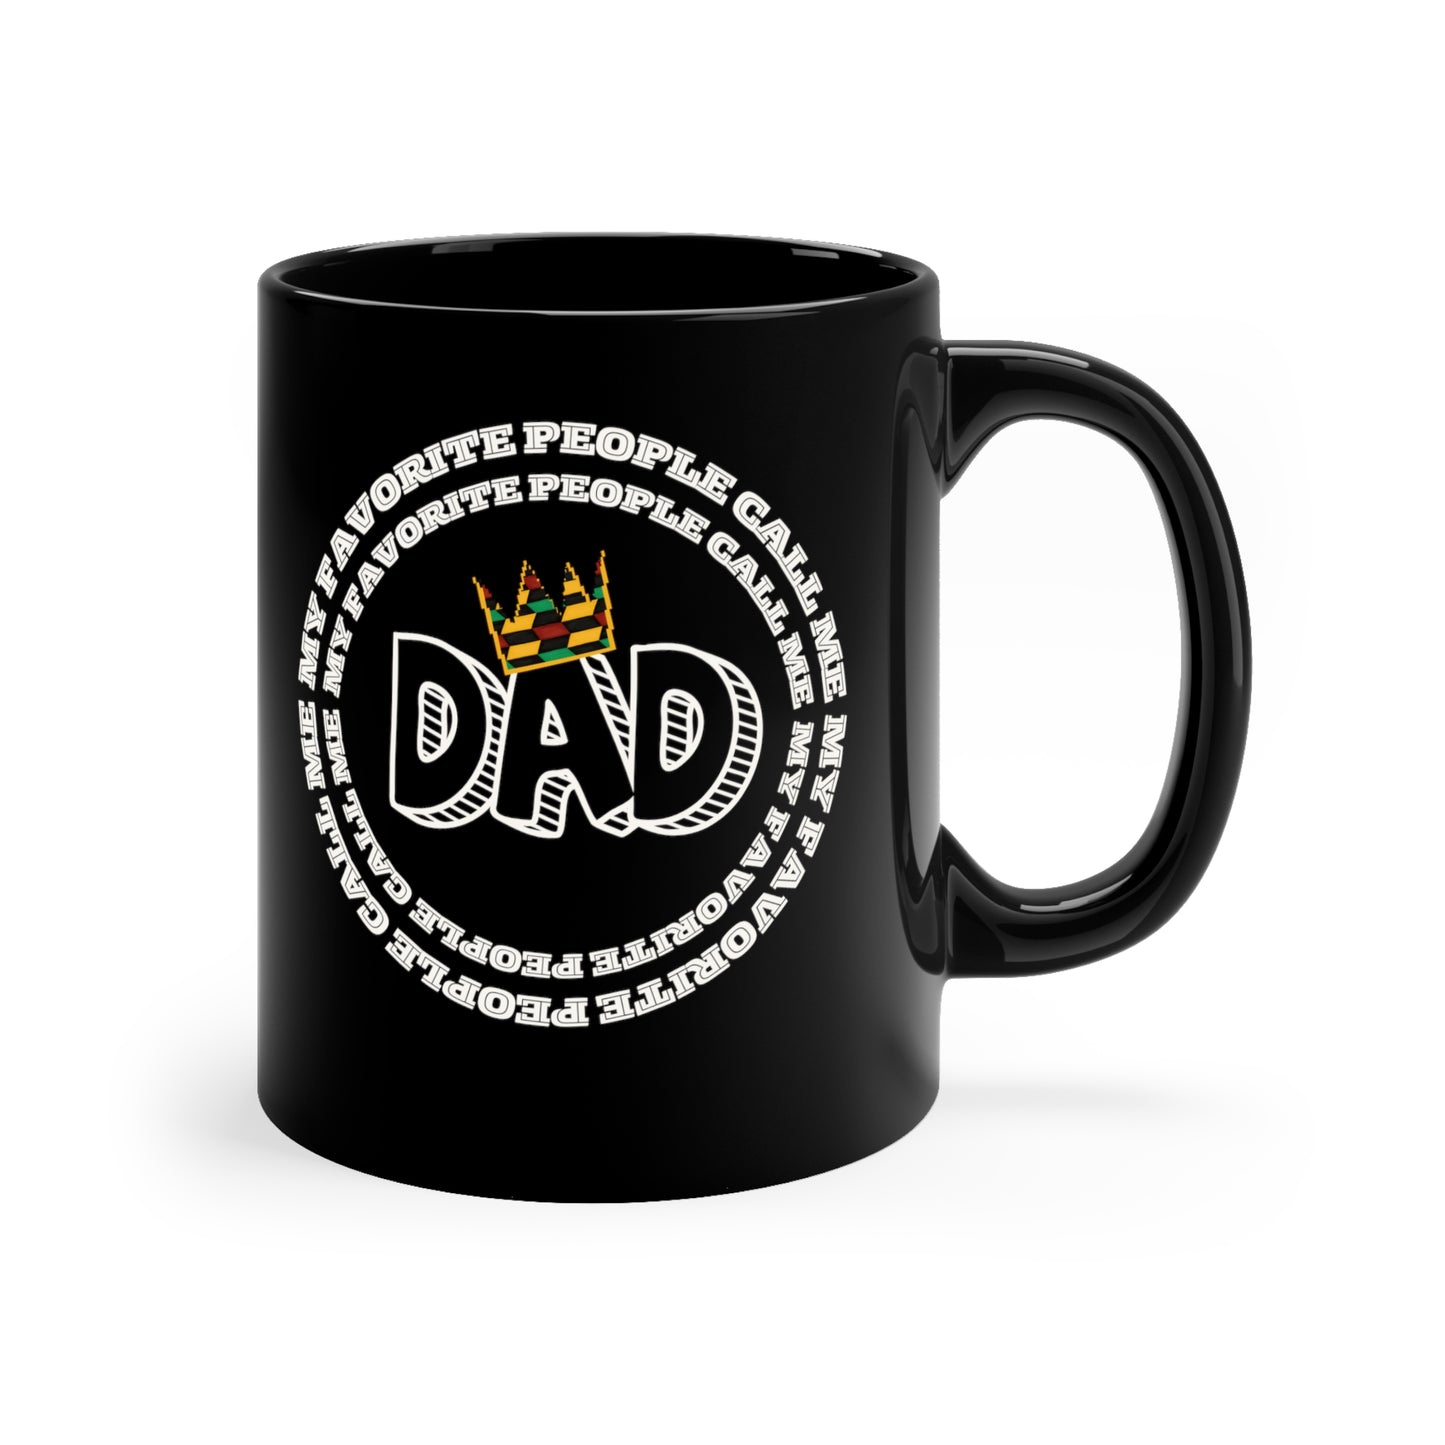 My Favorite People Call Me DAD Black Coffee Mug, 11oz